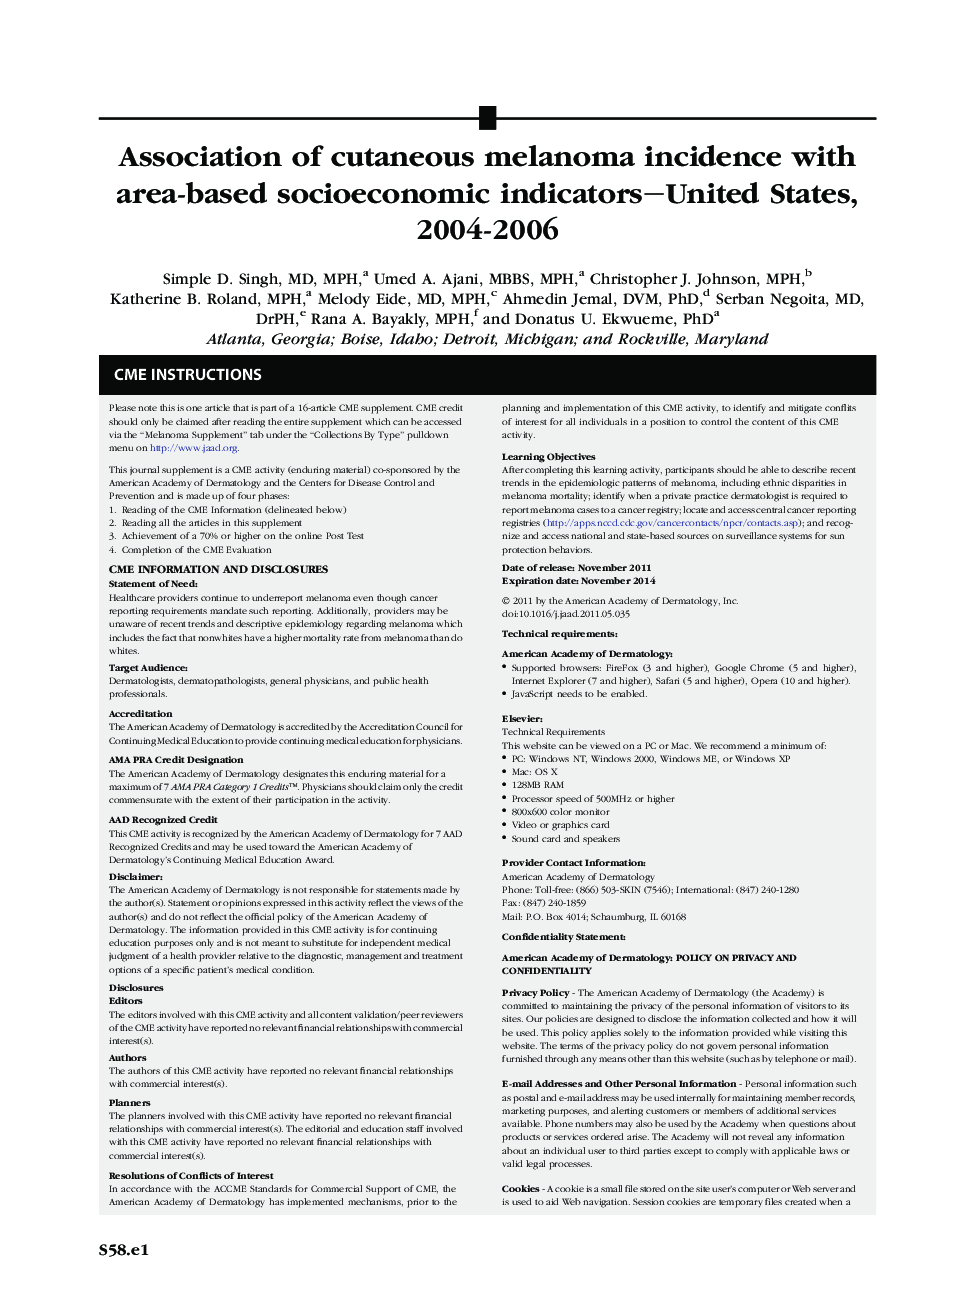 Association of cutaneous melanoma incidence with area-based socioeconomic indicators-United States, 2004-2006